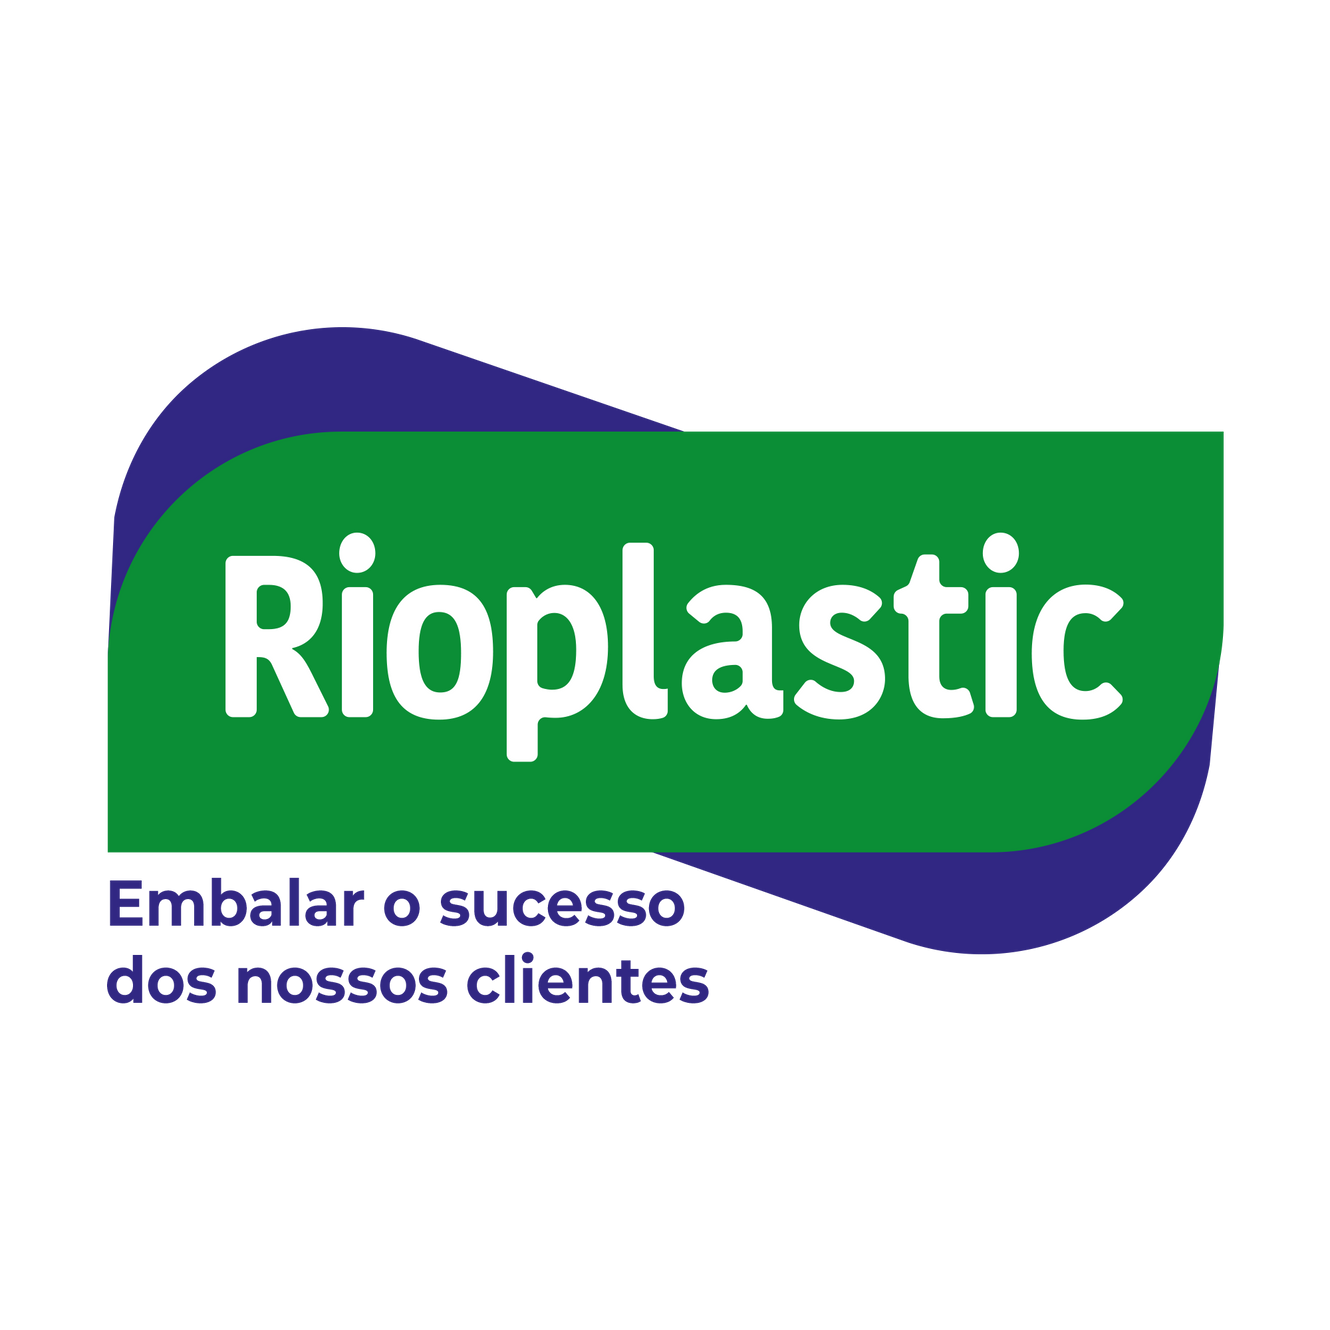 Indústria e Comércio de Plásticos Rio Pardo Ltda.